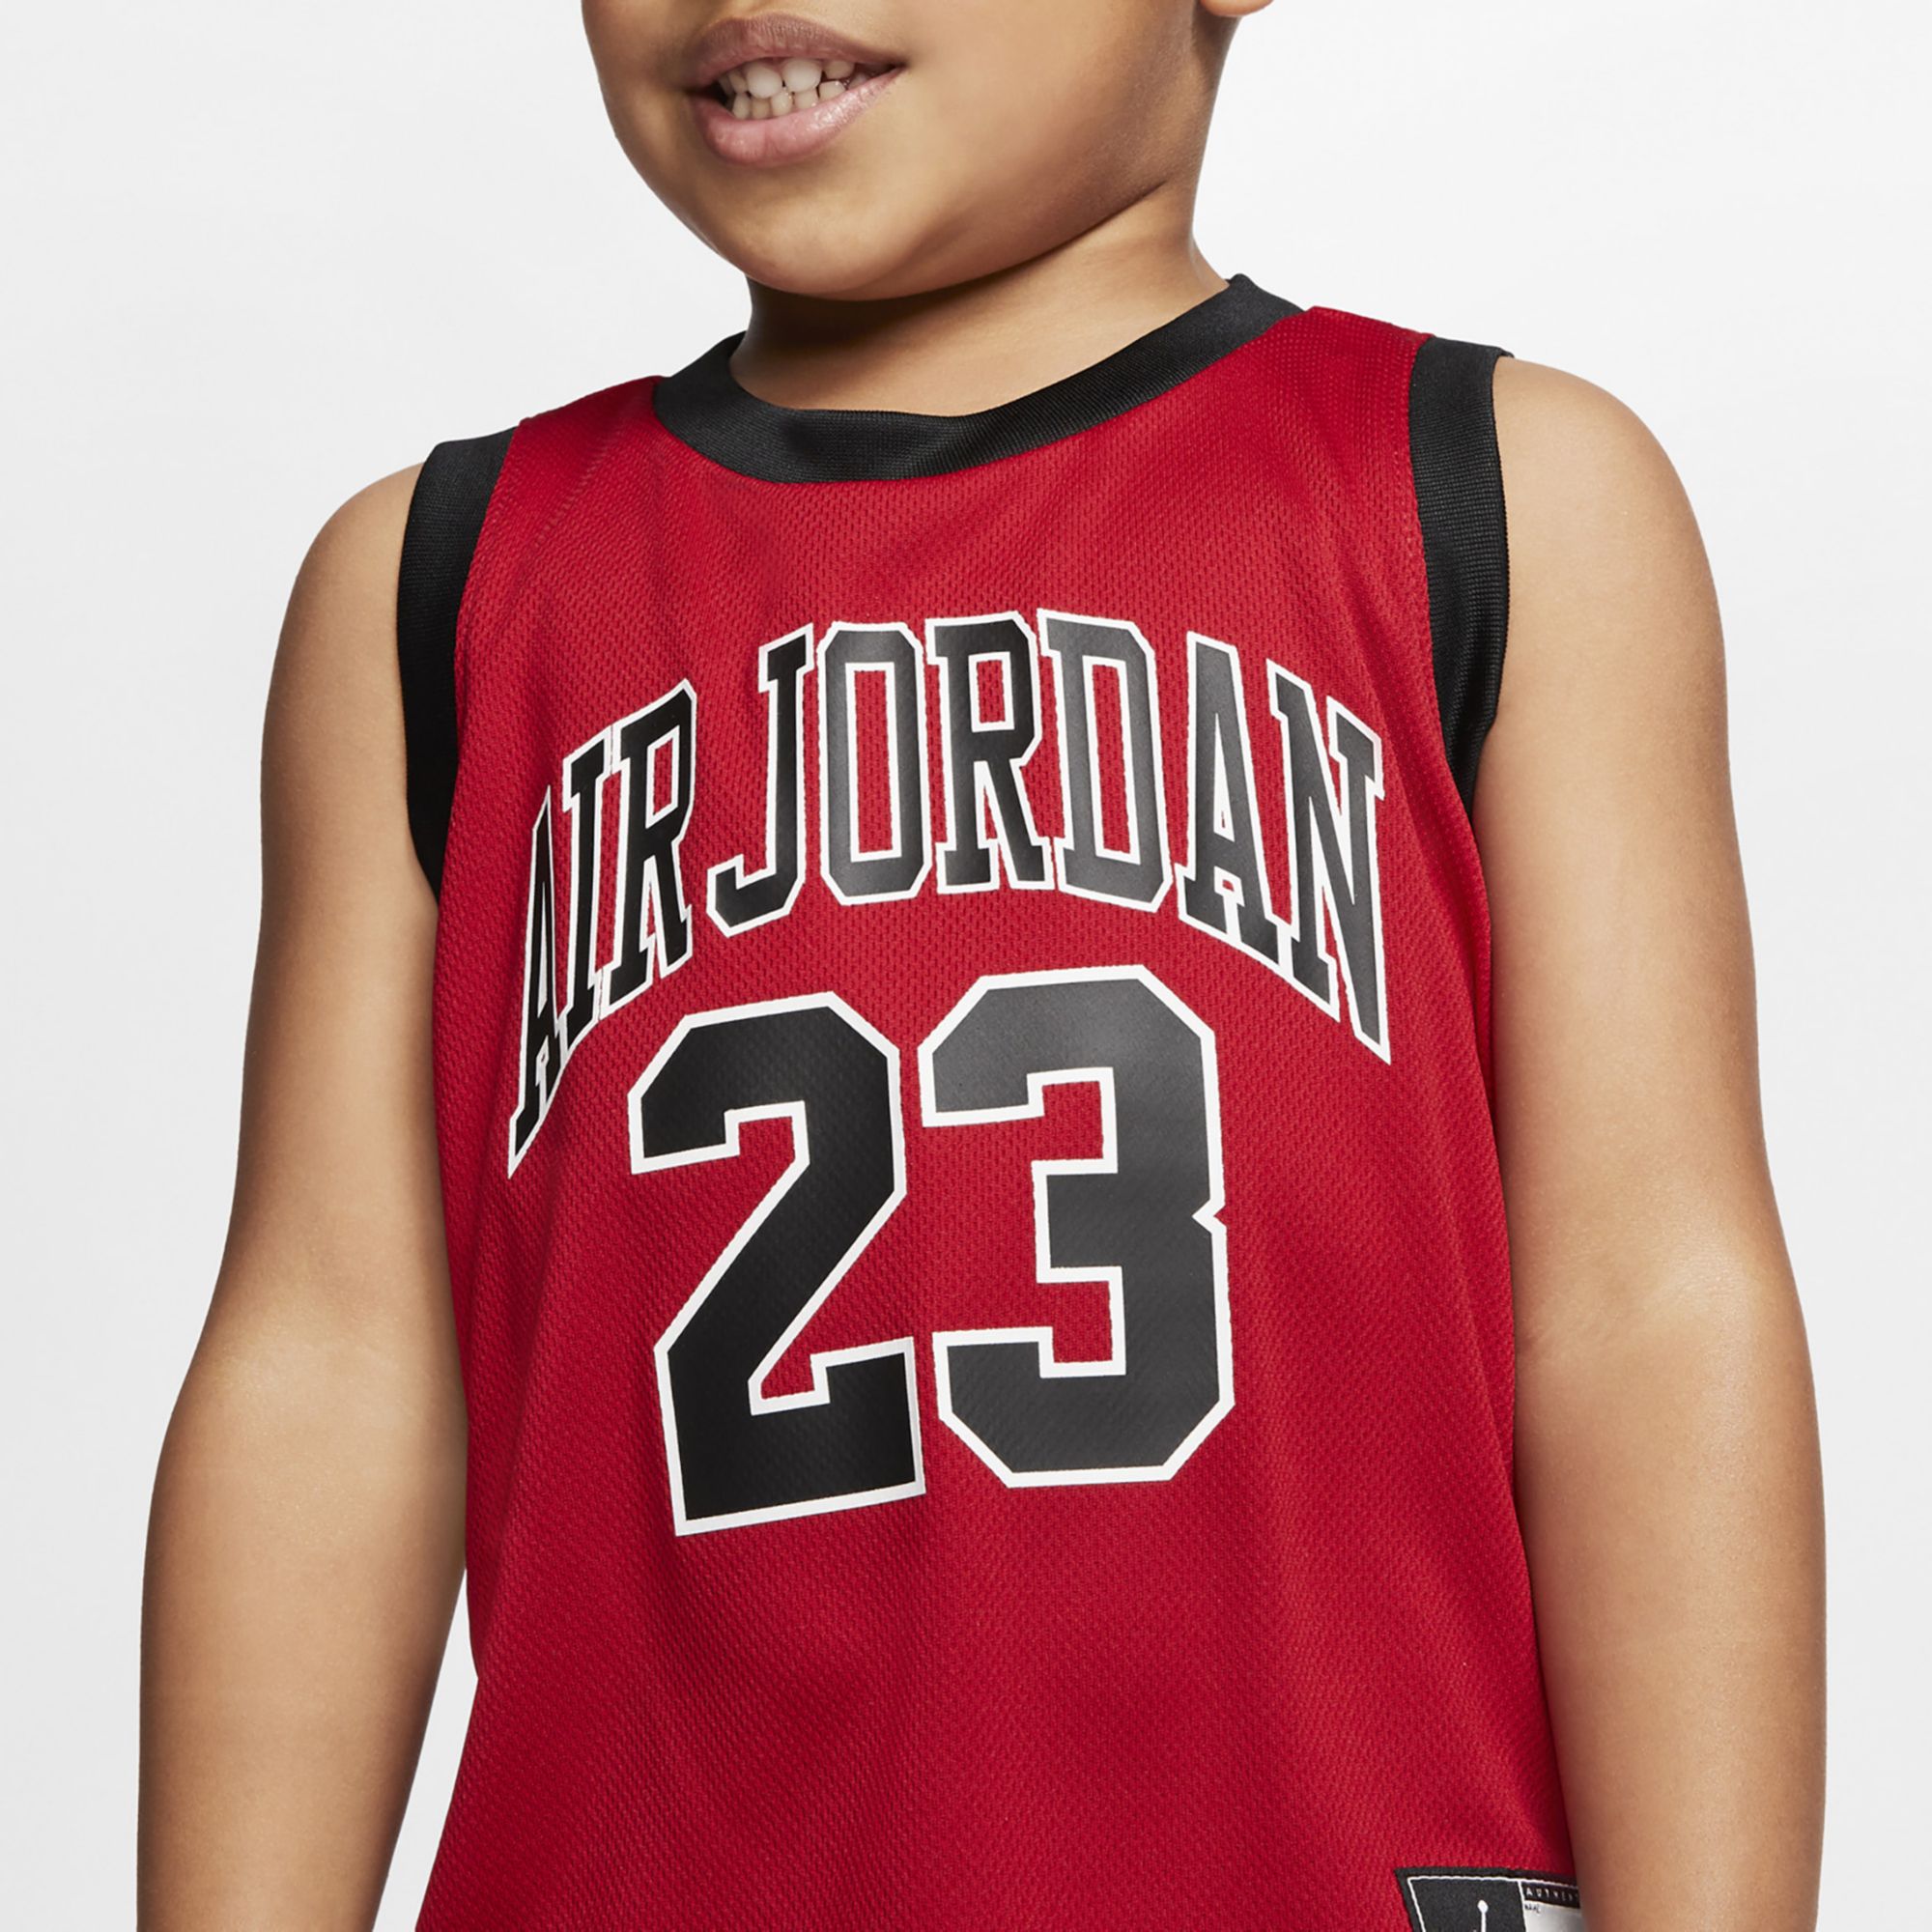 Jordan Little Boys' Mesh Basketball Jersey Tank Top and Shorts Set